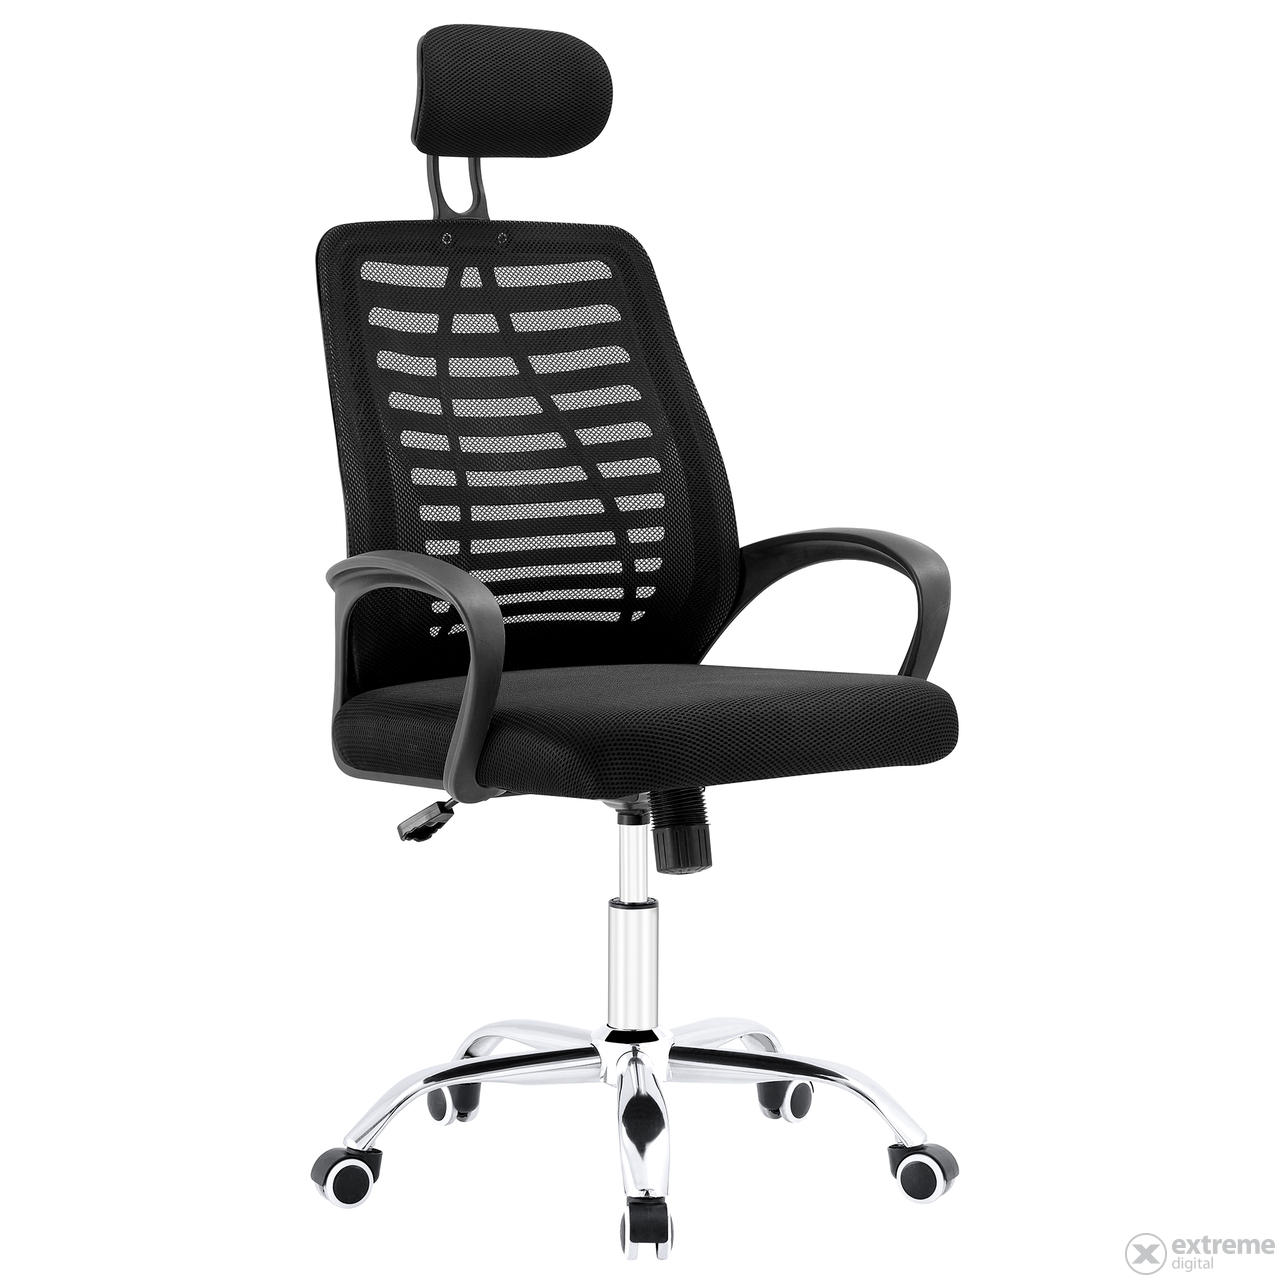 Kring Ergo Flexy Ergonomska uredska stolica u crnoj boji